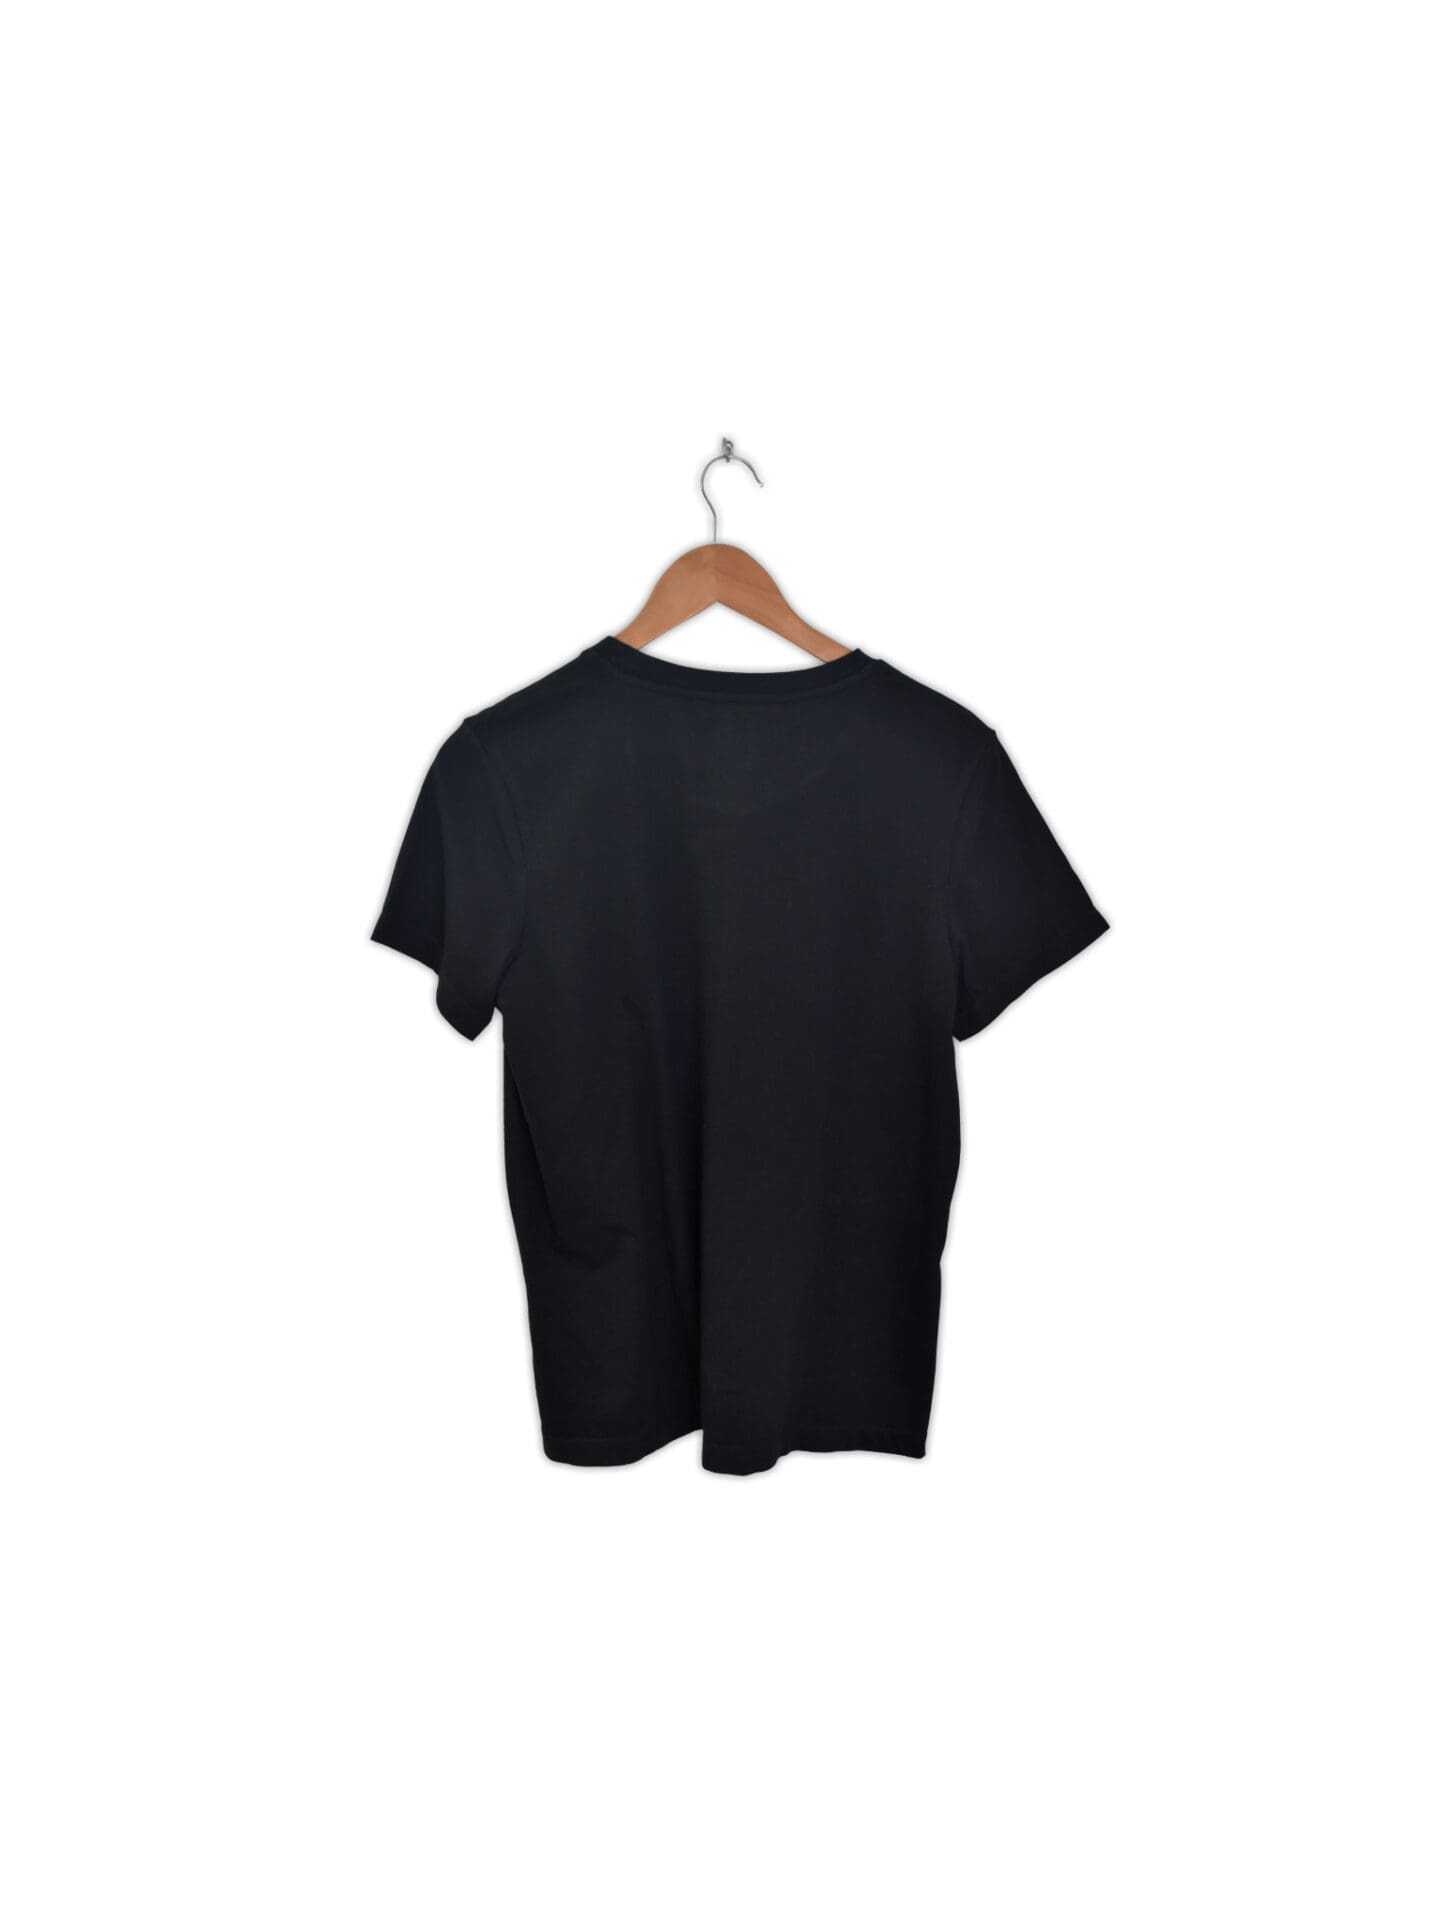 Small, cotton, printed black t-shirt, Cooper